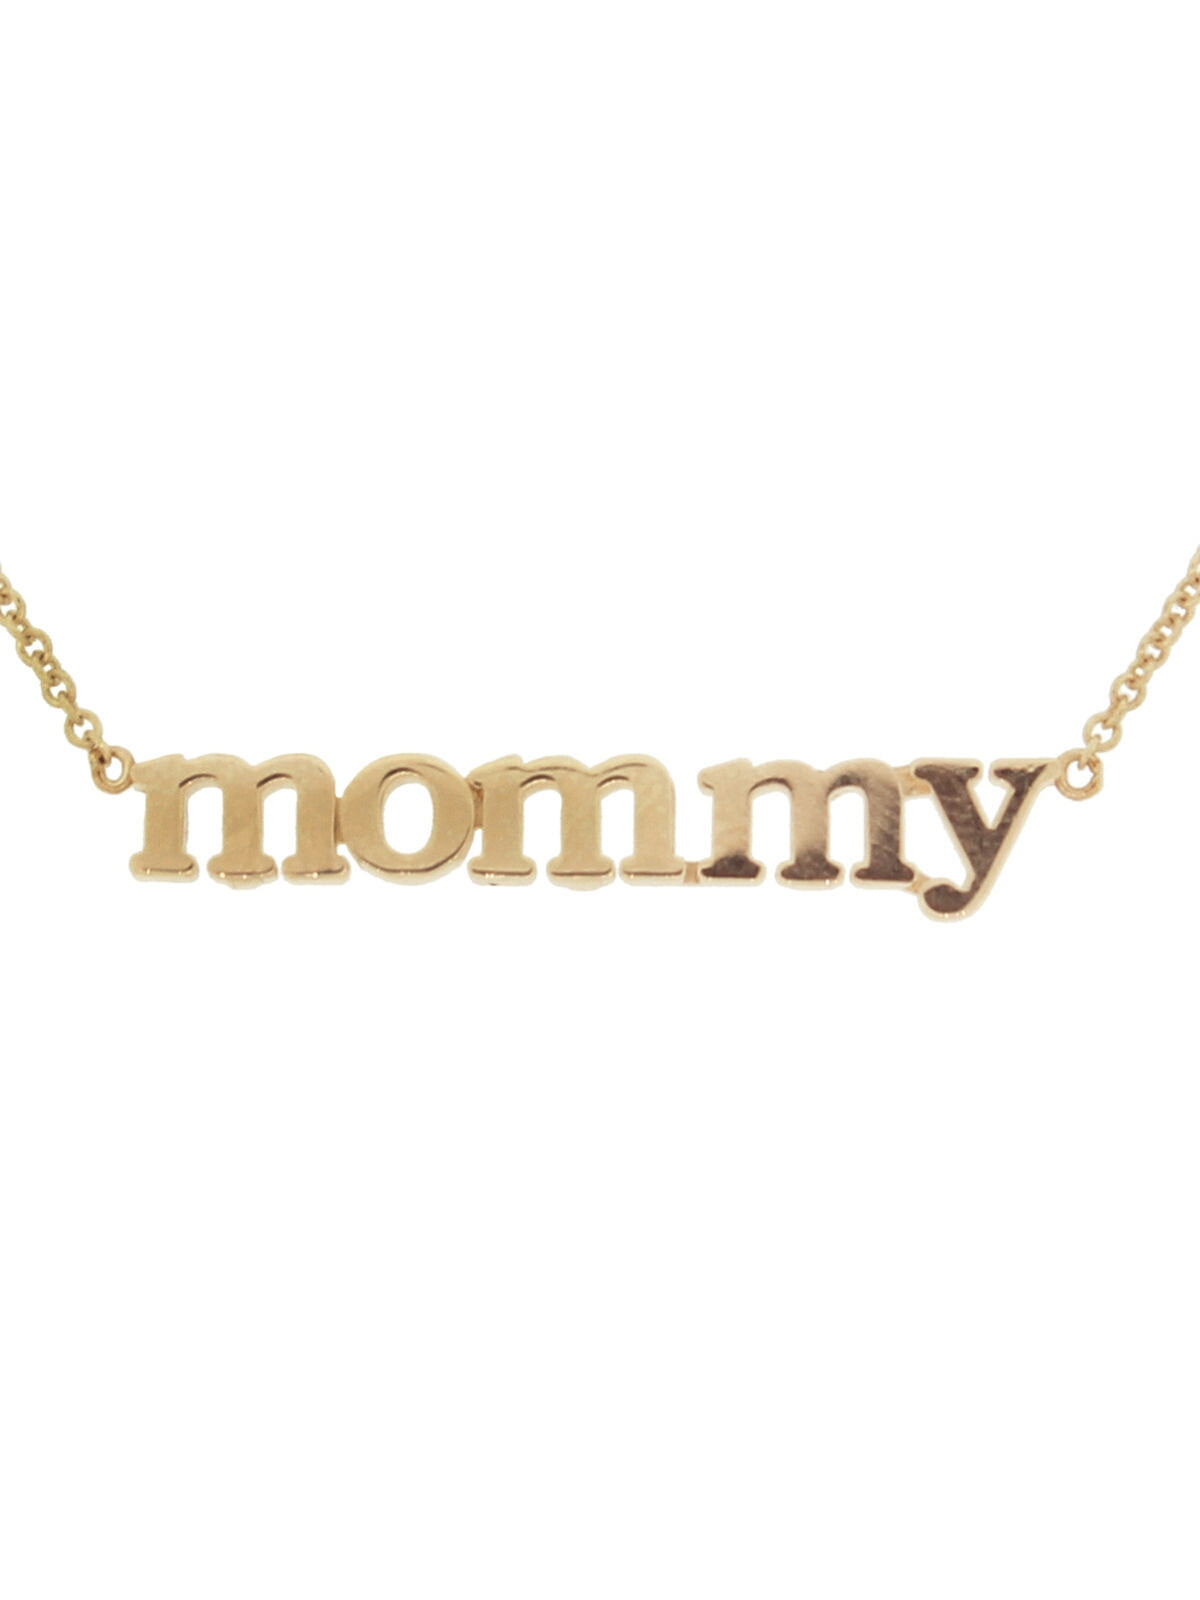 rose gold mom necklace